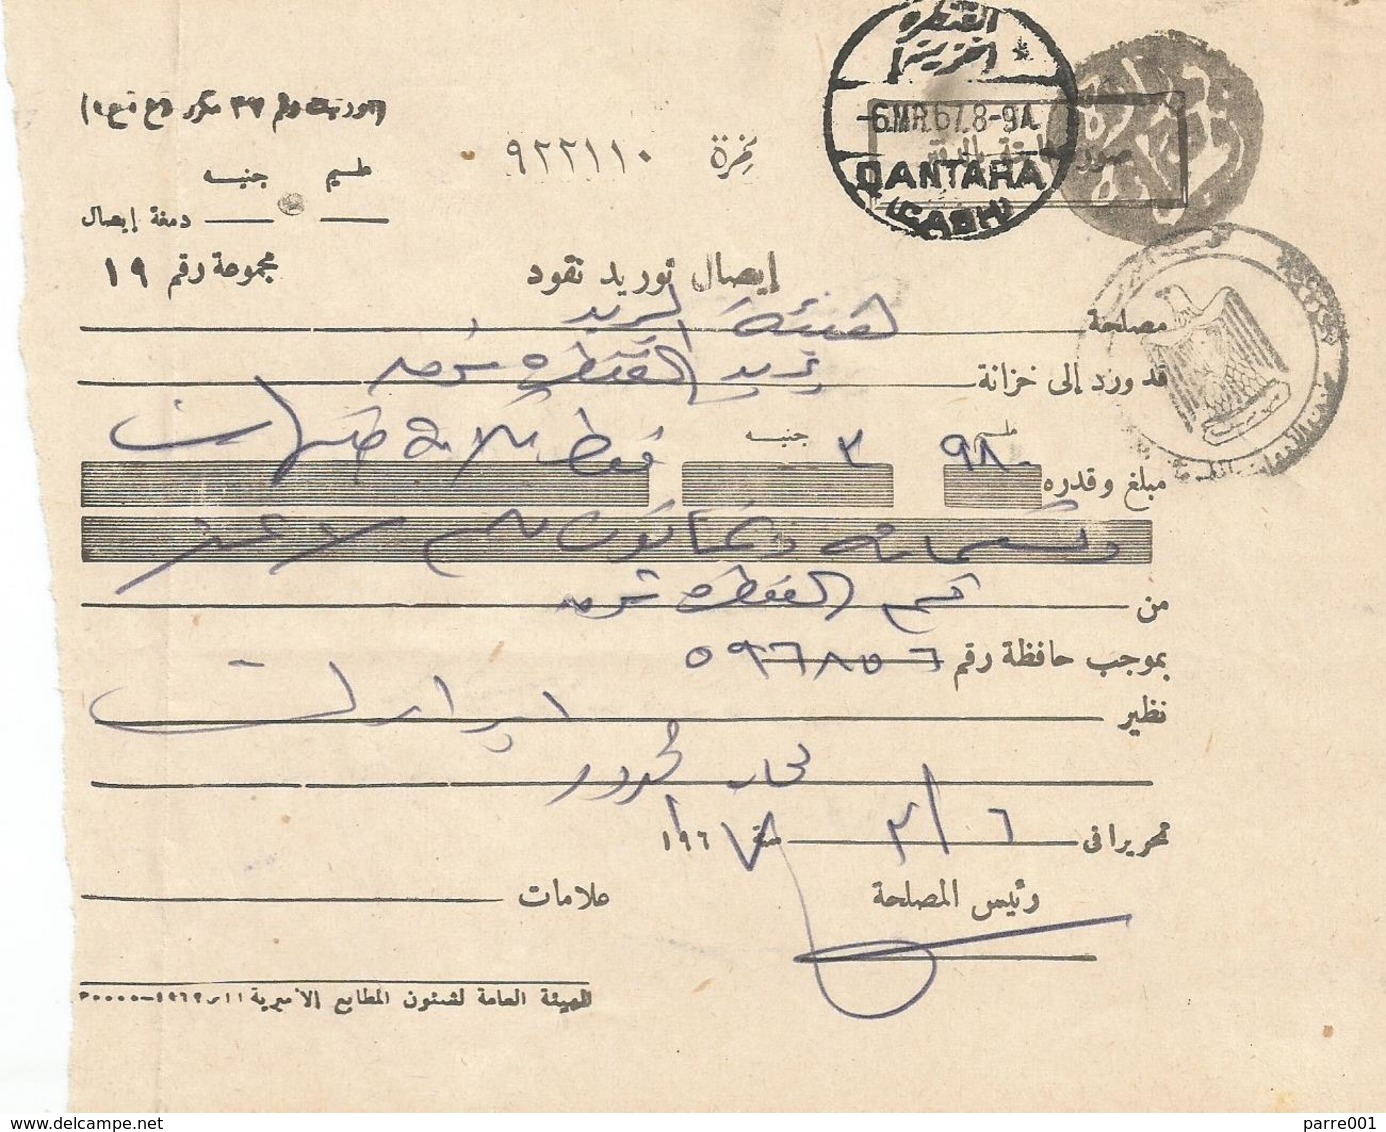 Egypt 1967 Quantara Cash Suez Canal Captured Postal Money Order Form By Israeli Army During Six Day War - Briefe U. Dokumente